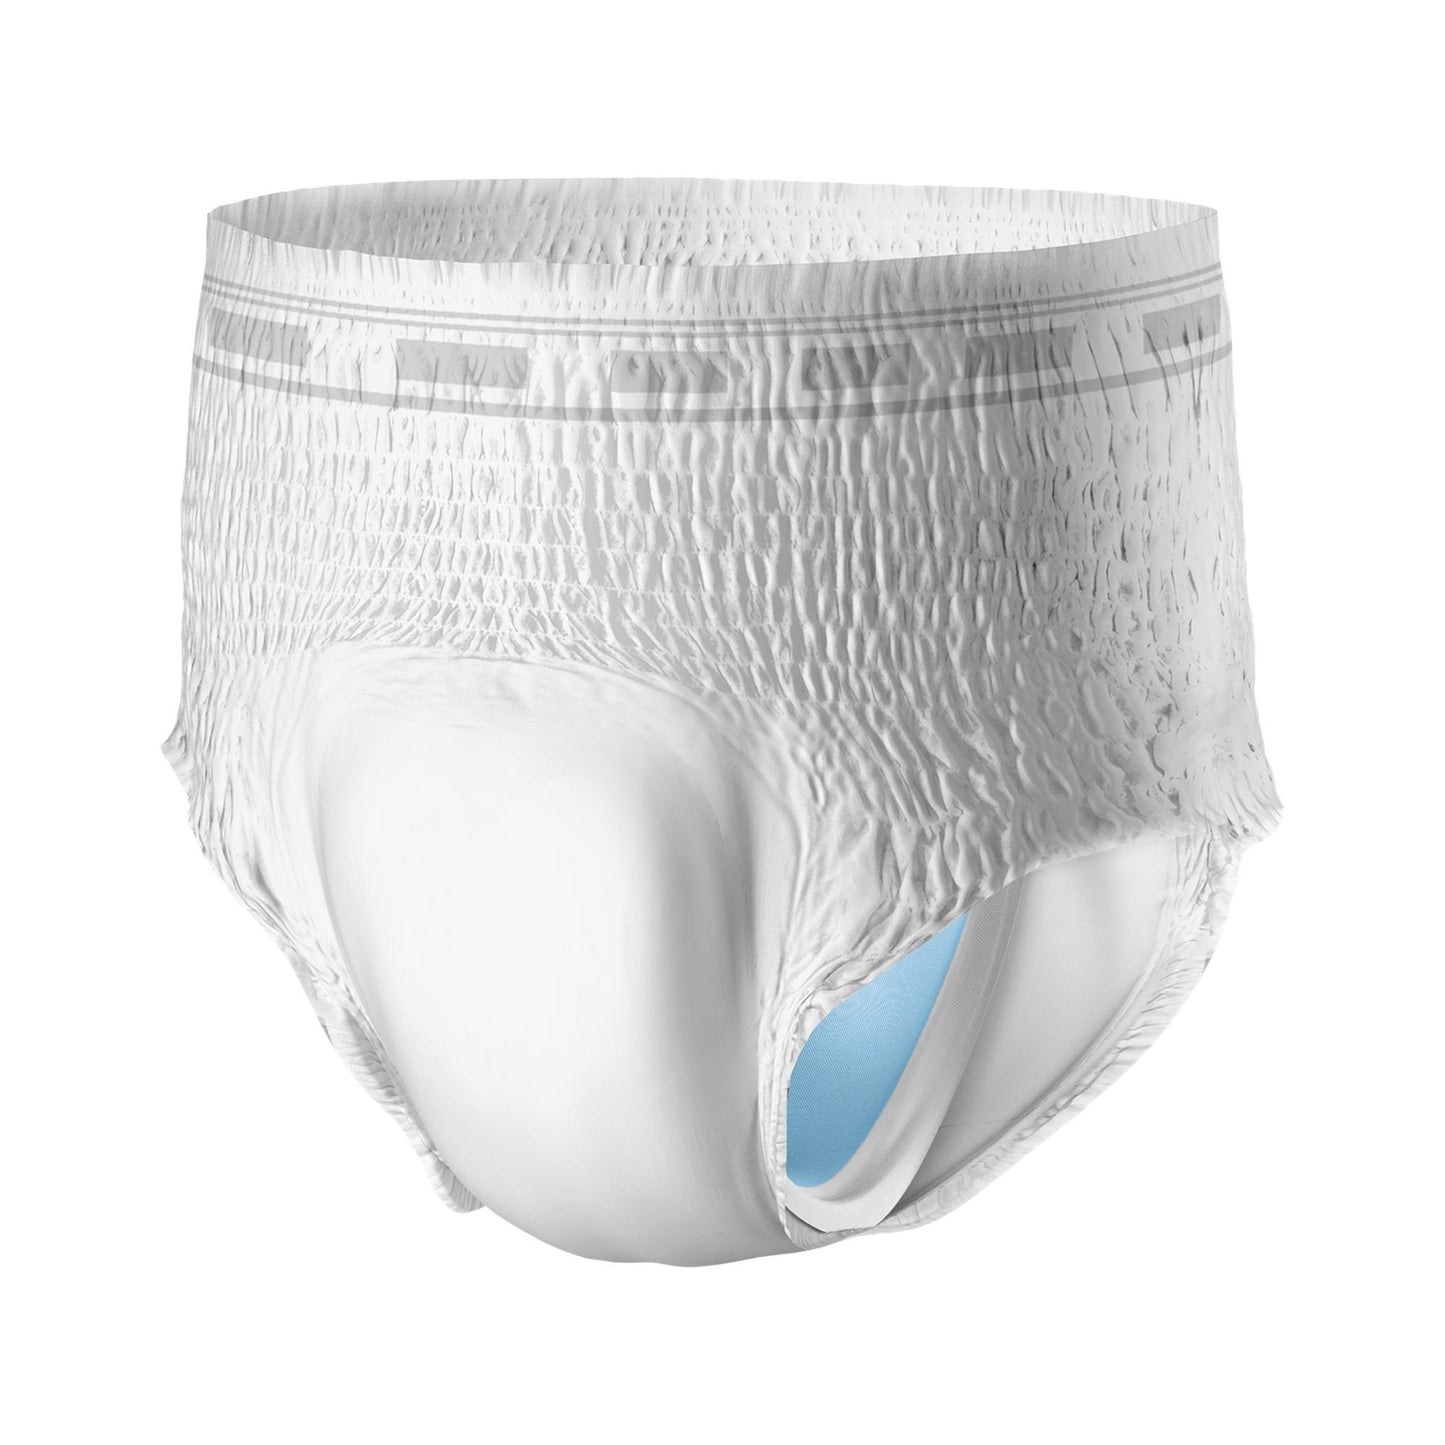 Prevail® Men's Daily Maximum Absorbent Underwear, Small / Medium, 80 ct